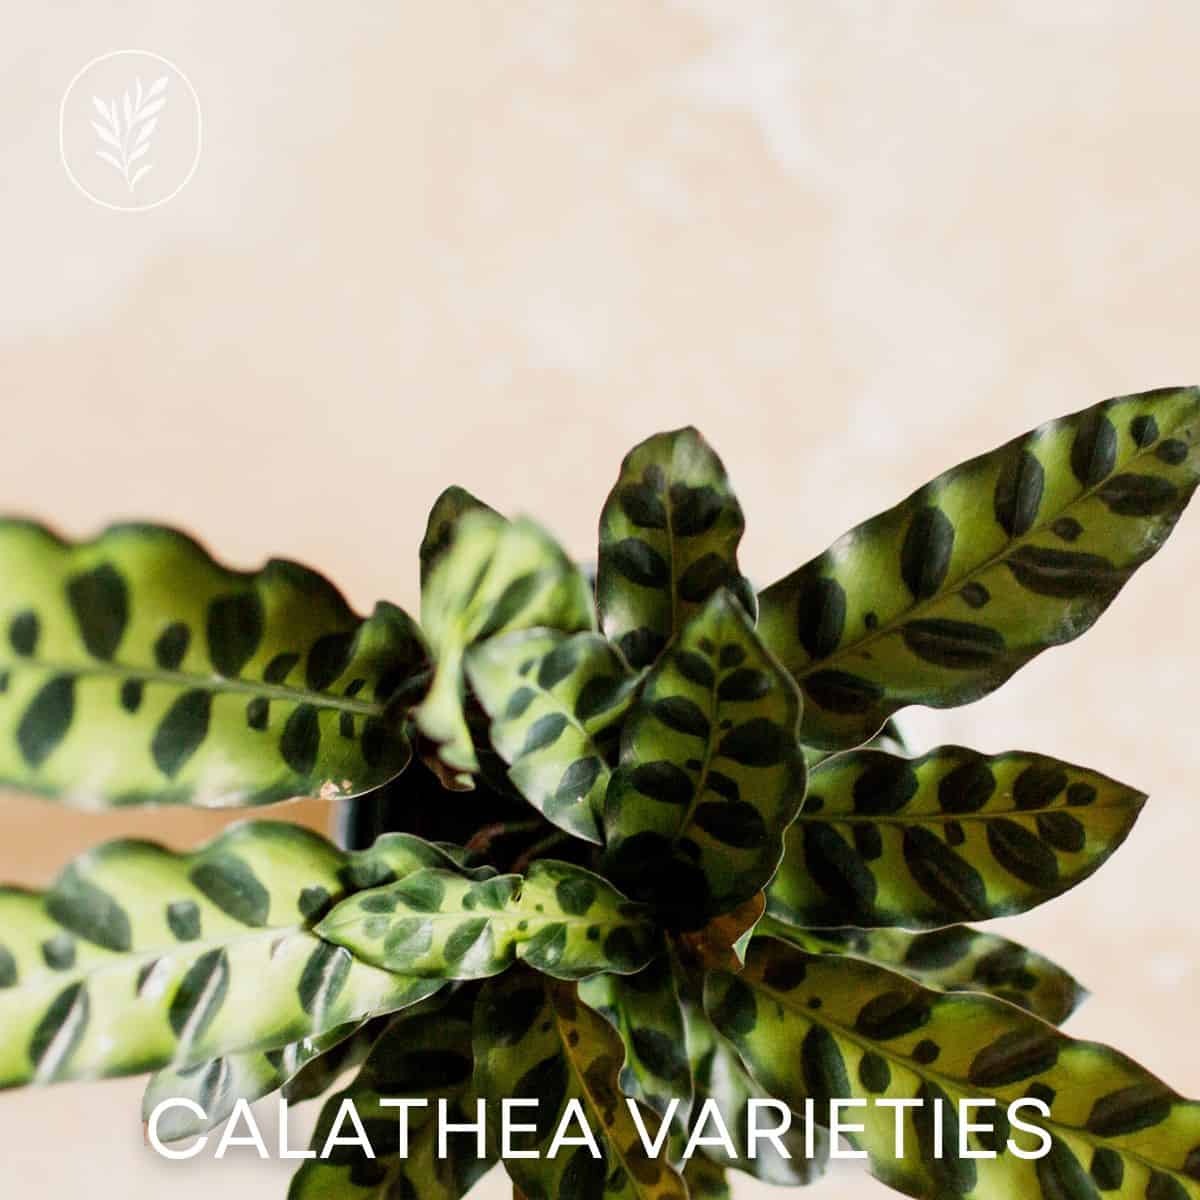 Calathea varieties via @home4theharvest